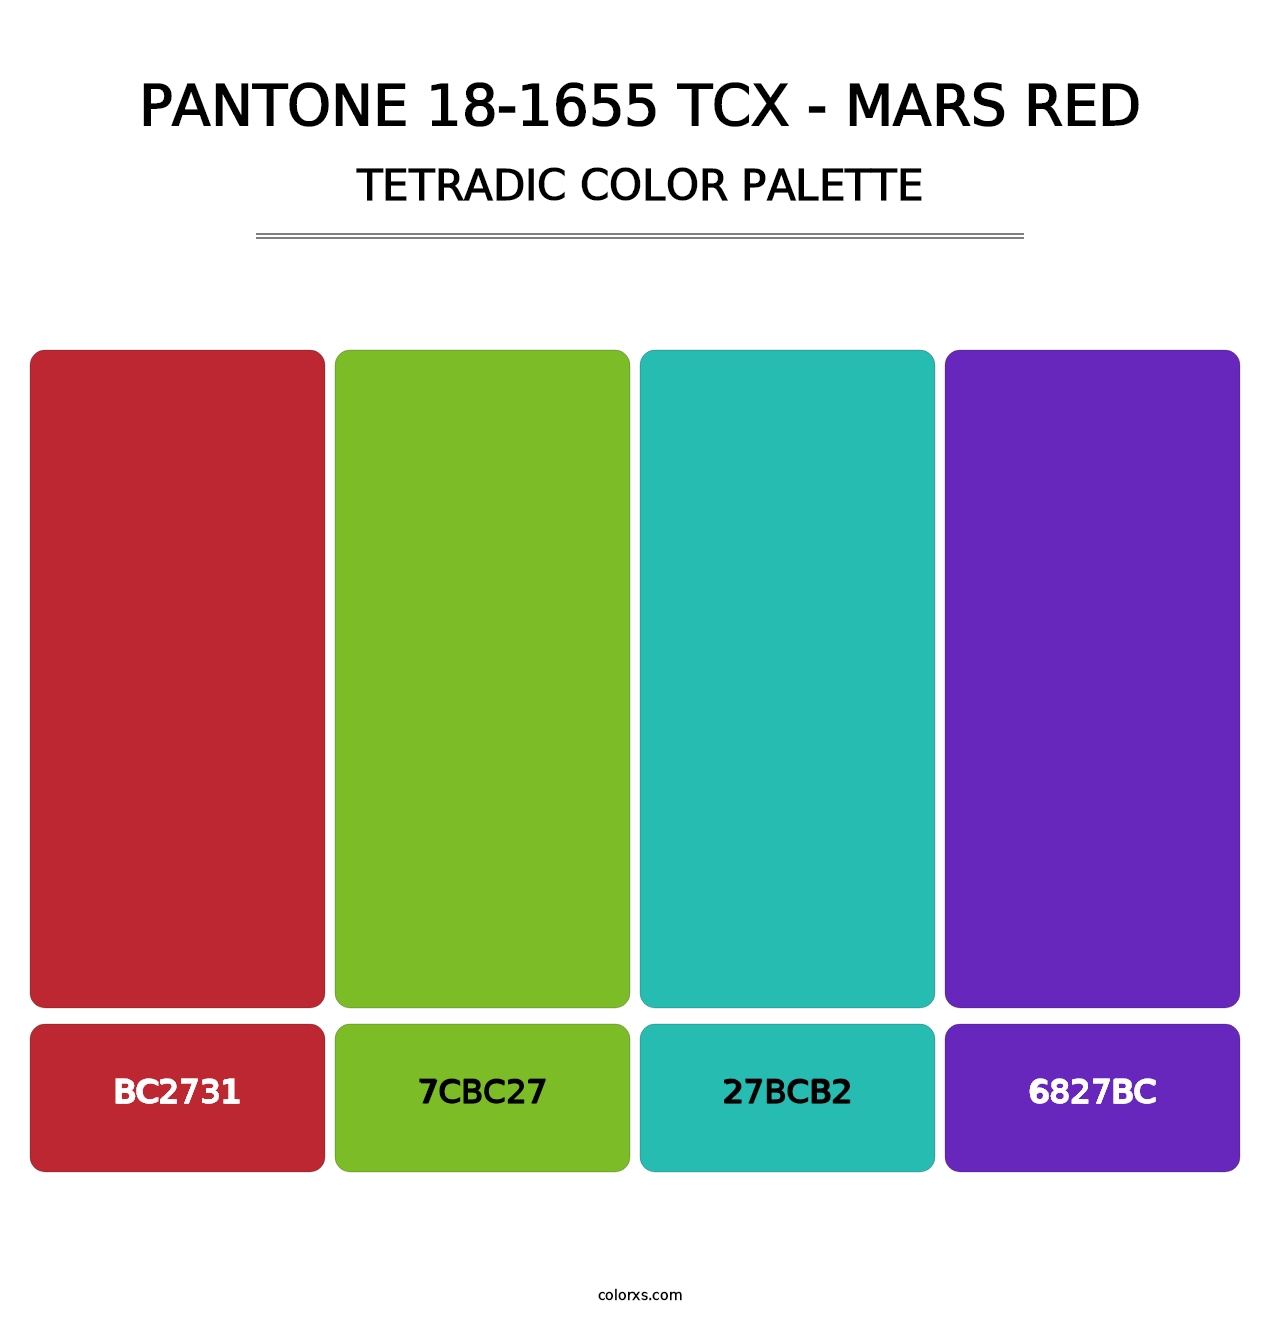 PANTONE 18-1655 TCX - Mars Red - Tetradic Color Palette